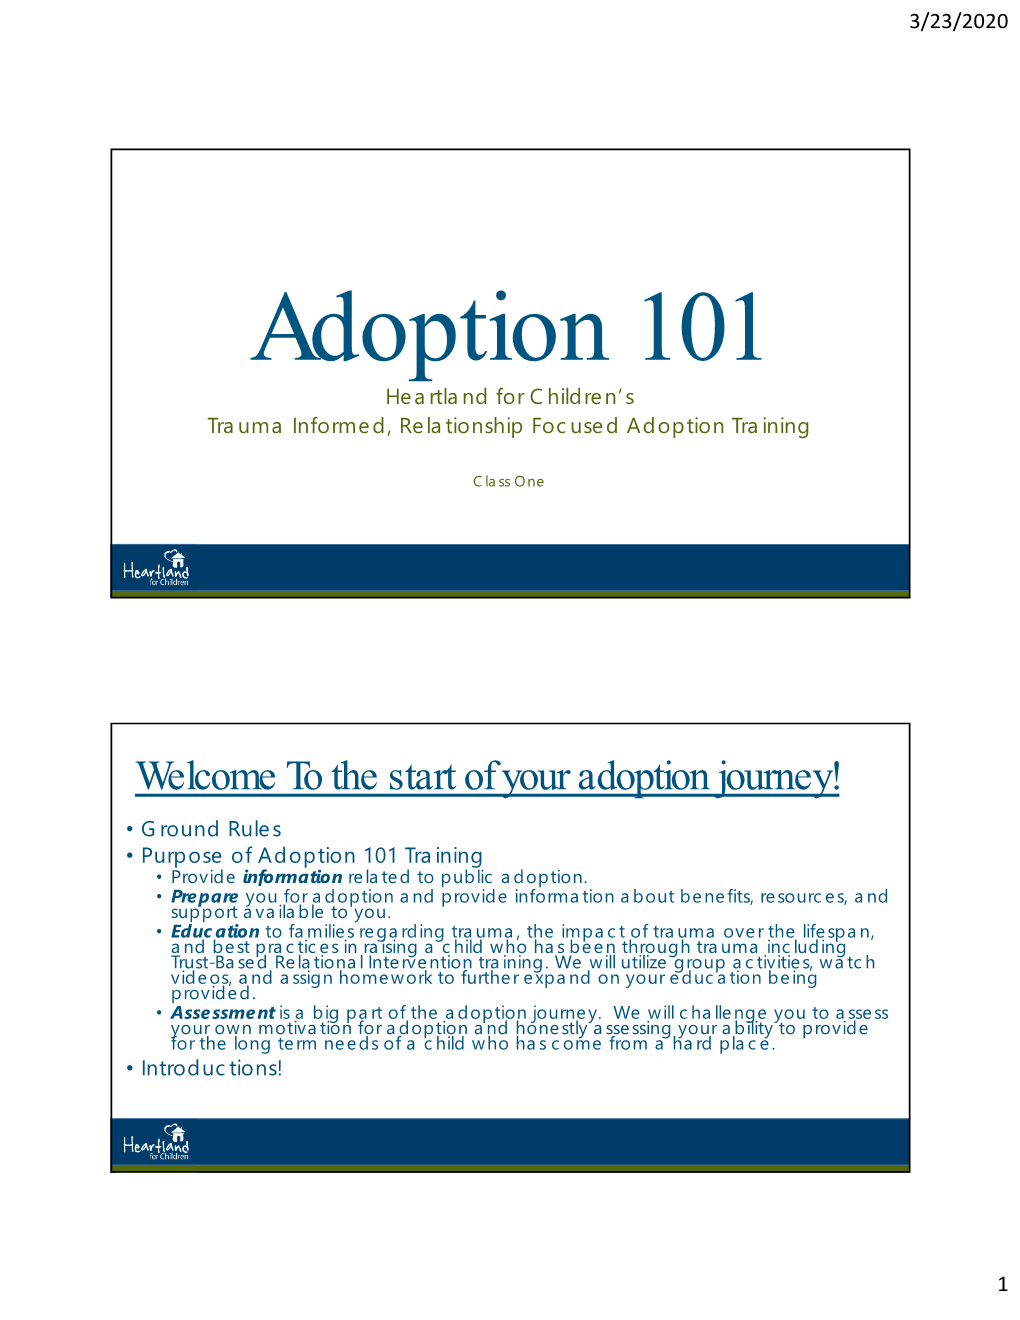 Adoption 101 Heartland for Children’S Trauma Informed, Relationship Focused Adoption Training